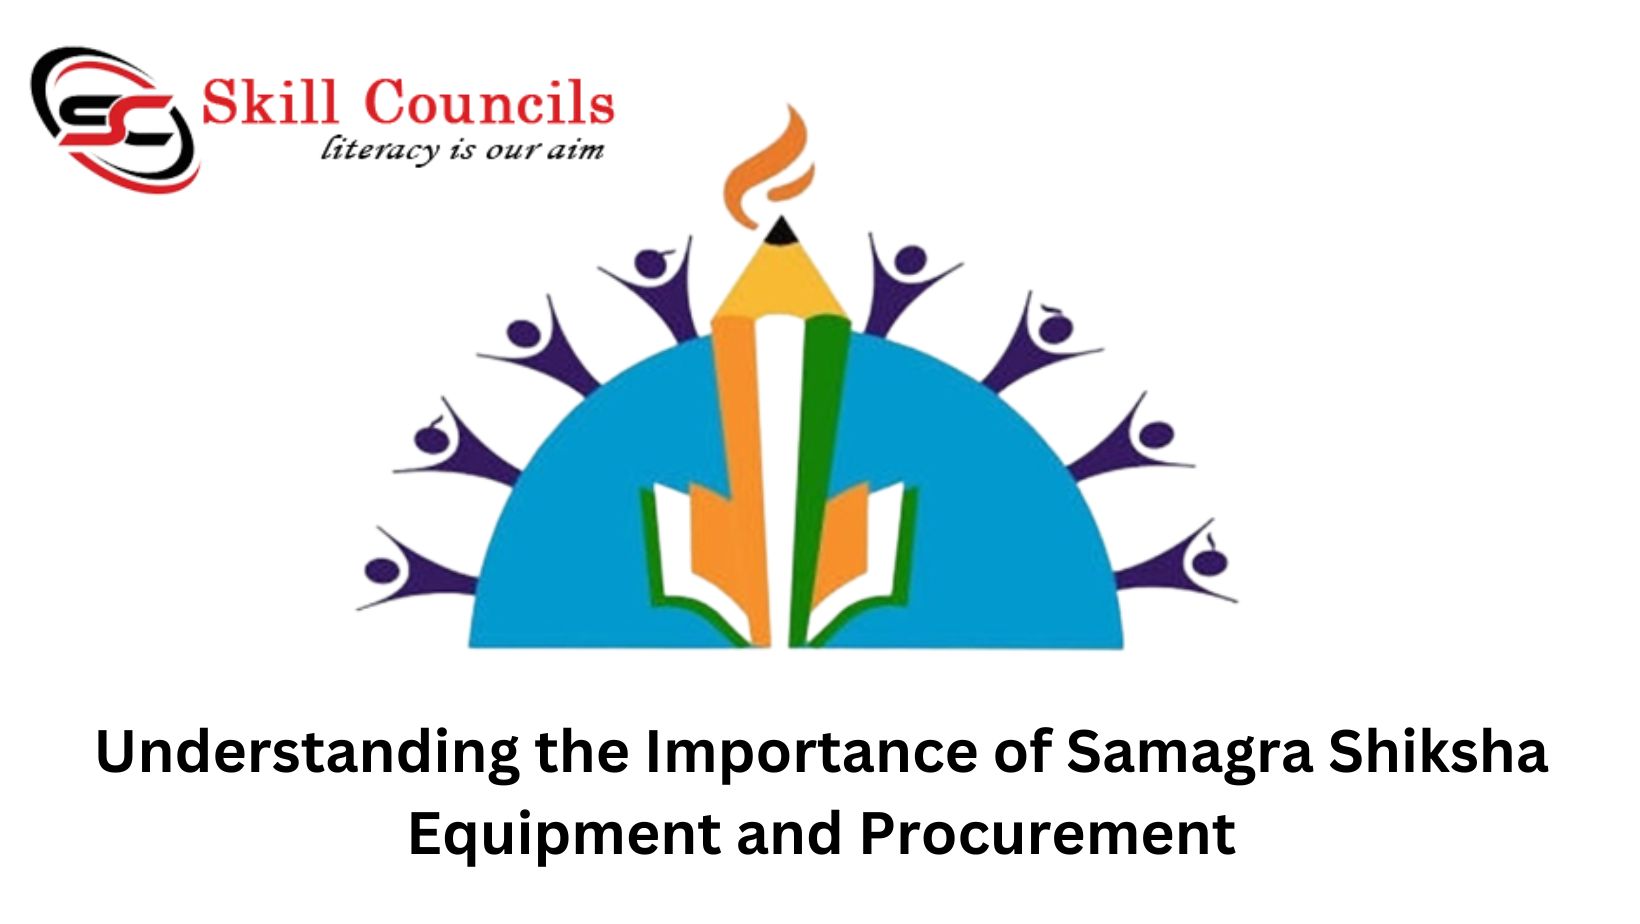 Samagra Shiksha Equipment and Procurement